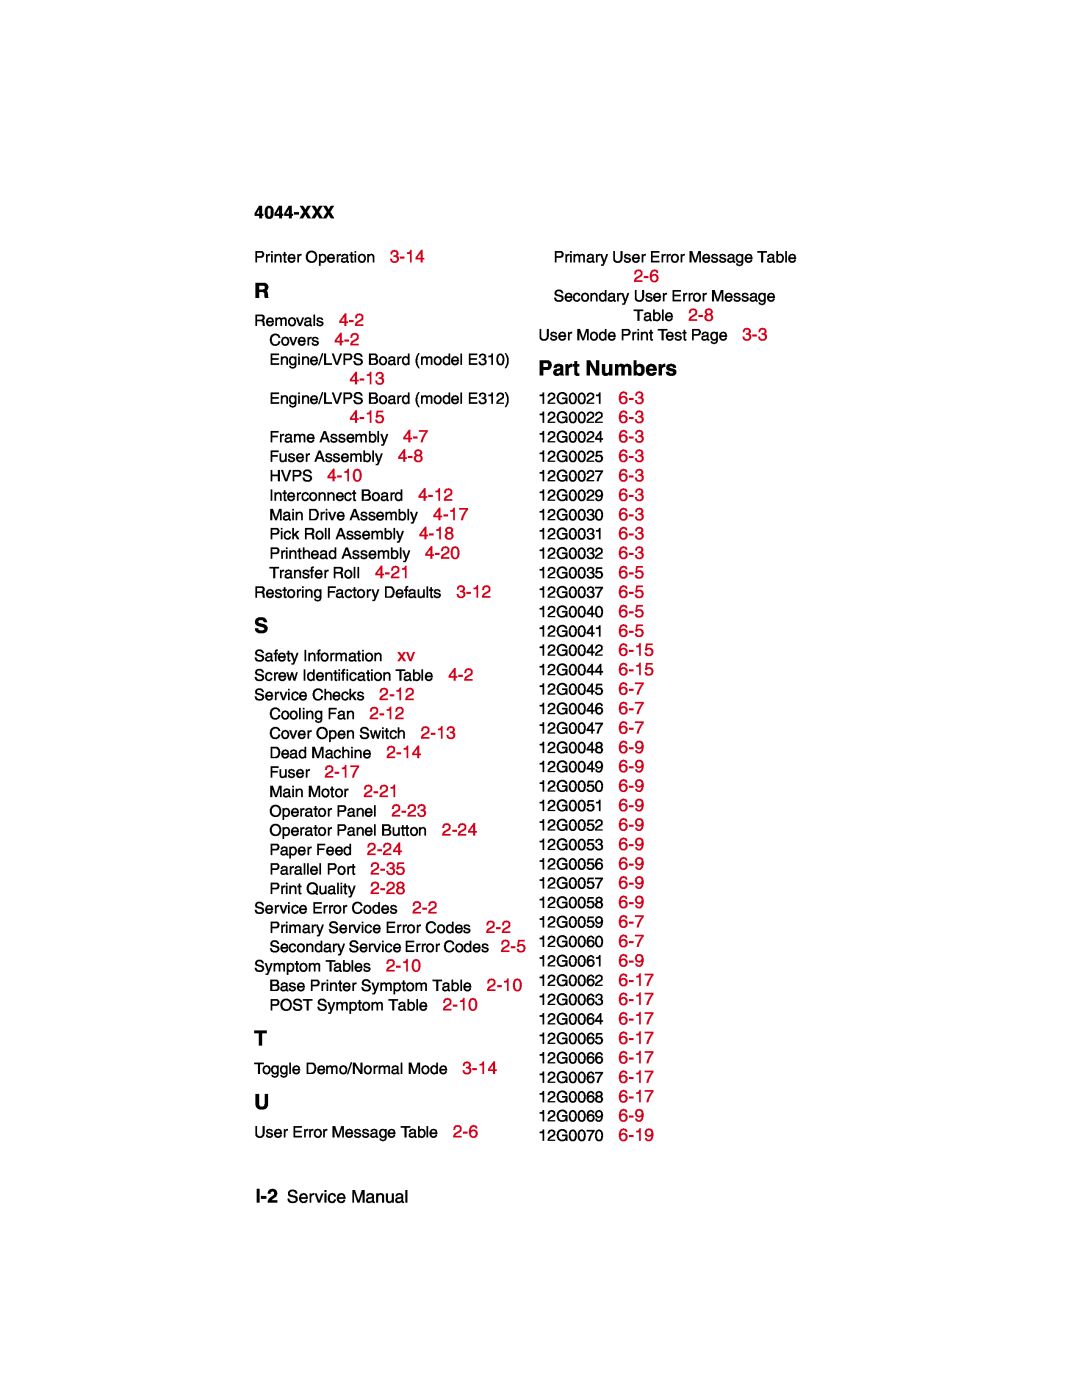 Lexmark 4044-XXX, E310 manual Part Numbers, I-2 Service Manual 